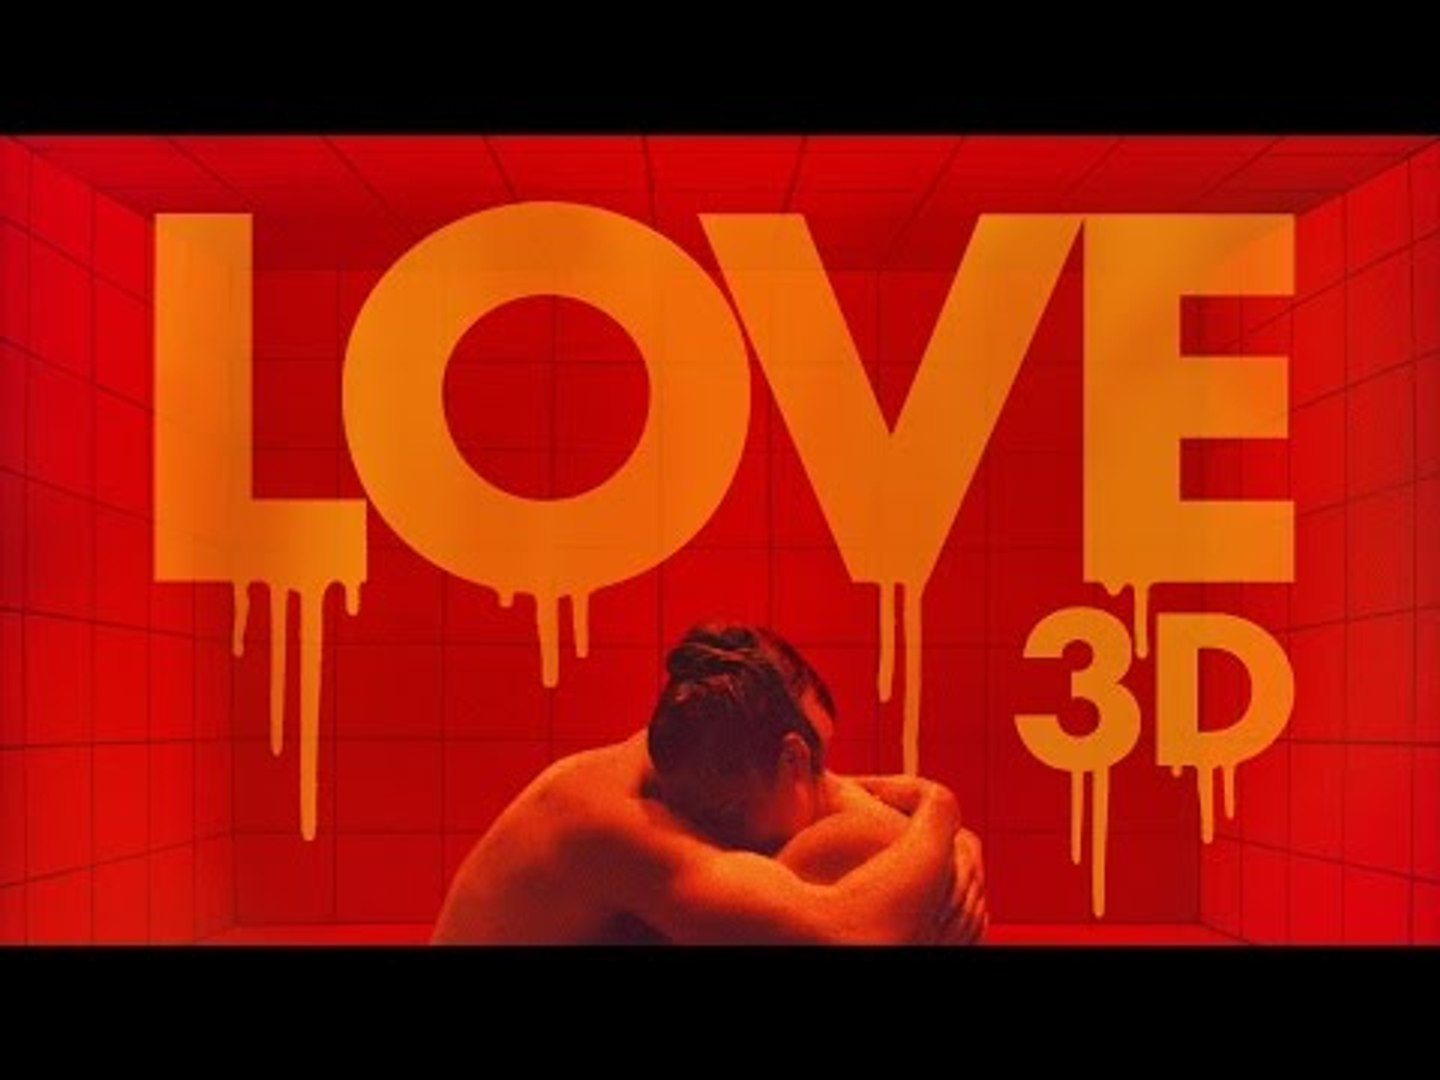 Love trailer - UK premiere on 18 November 2015 in cinemas nationwide -  video Dailymotion